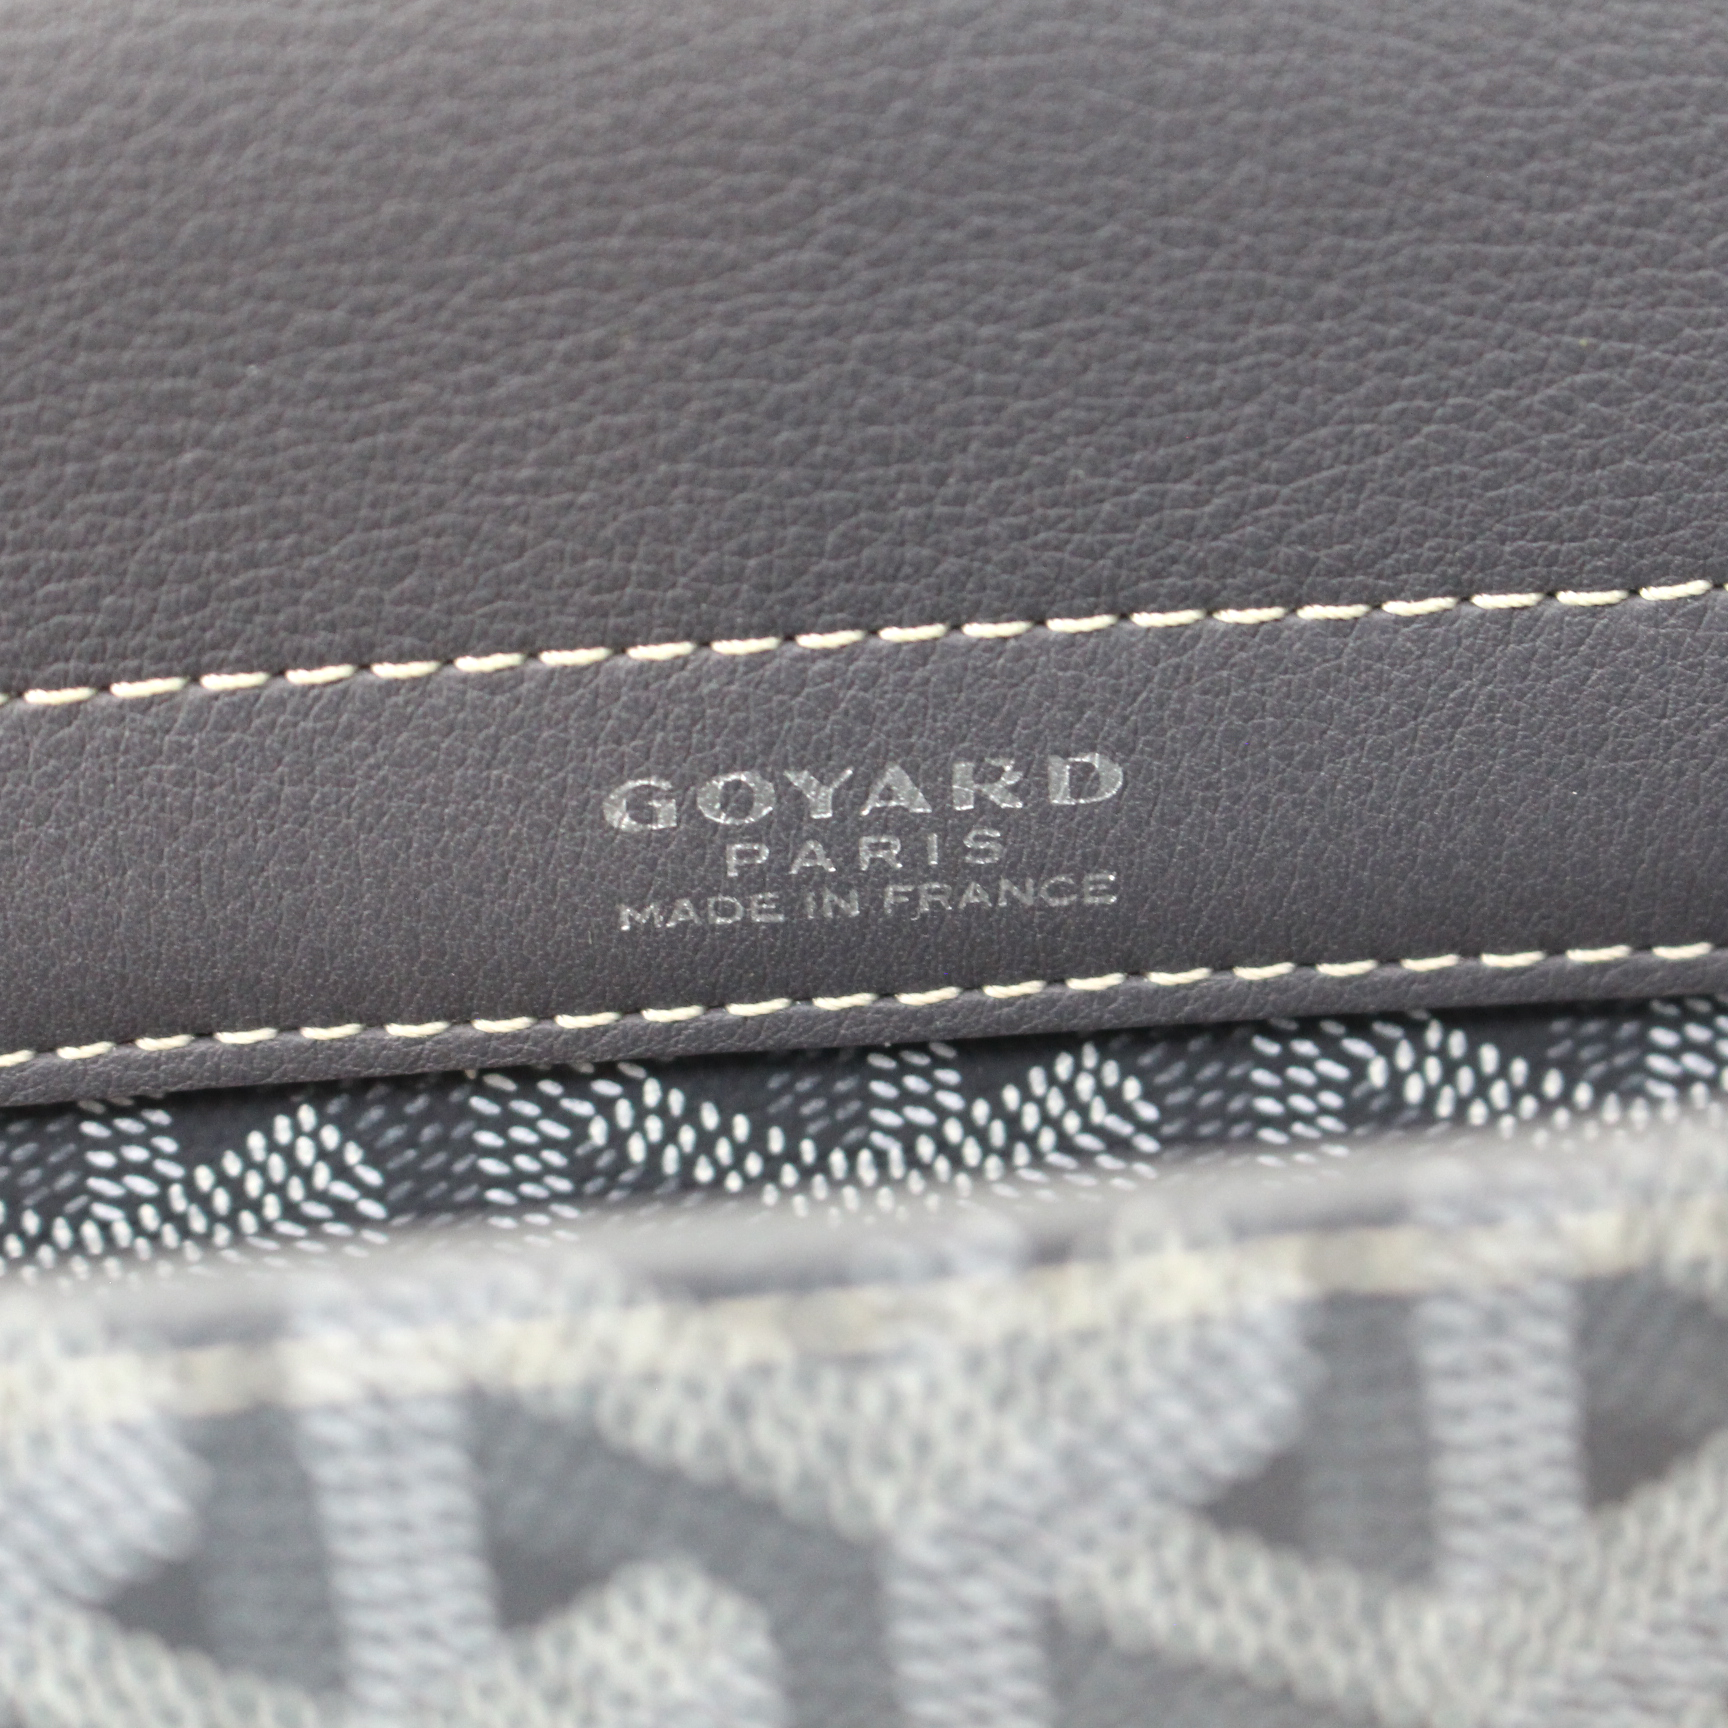 Goyard Rouette Soft PM Grey White Gayardine Coated Canvas Leather Tote Logo  Bag